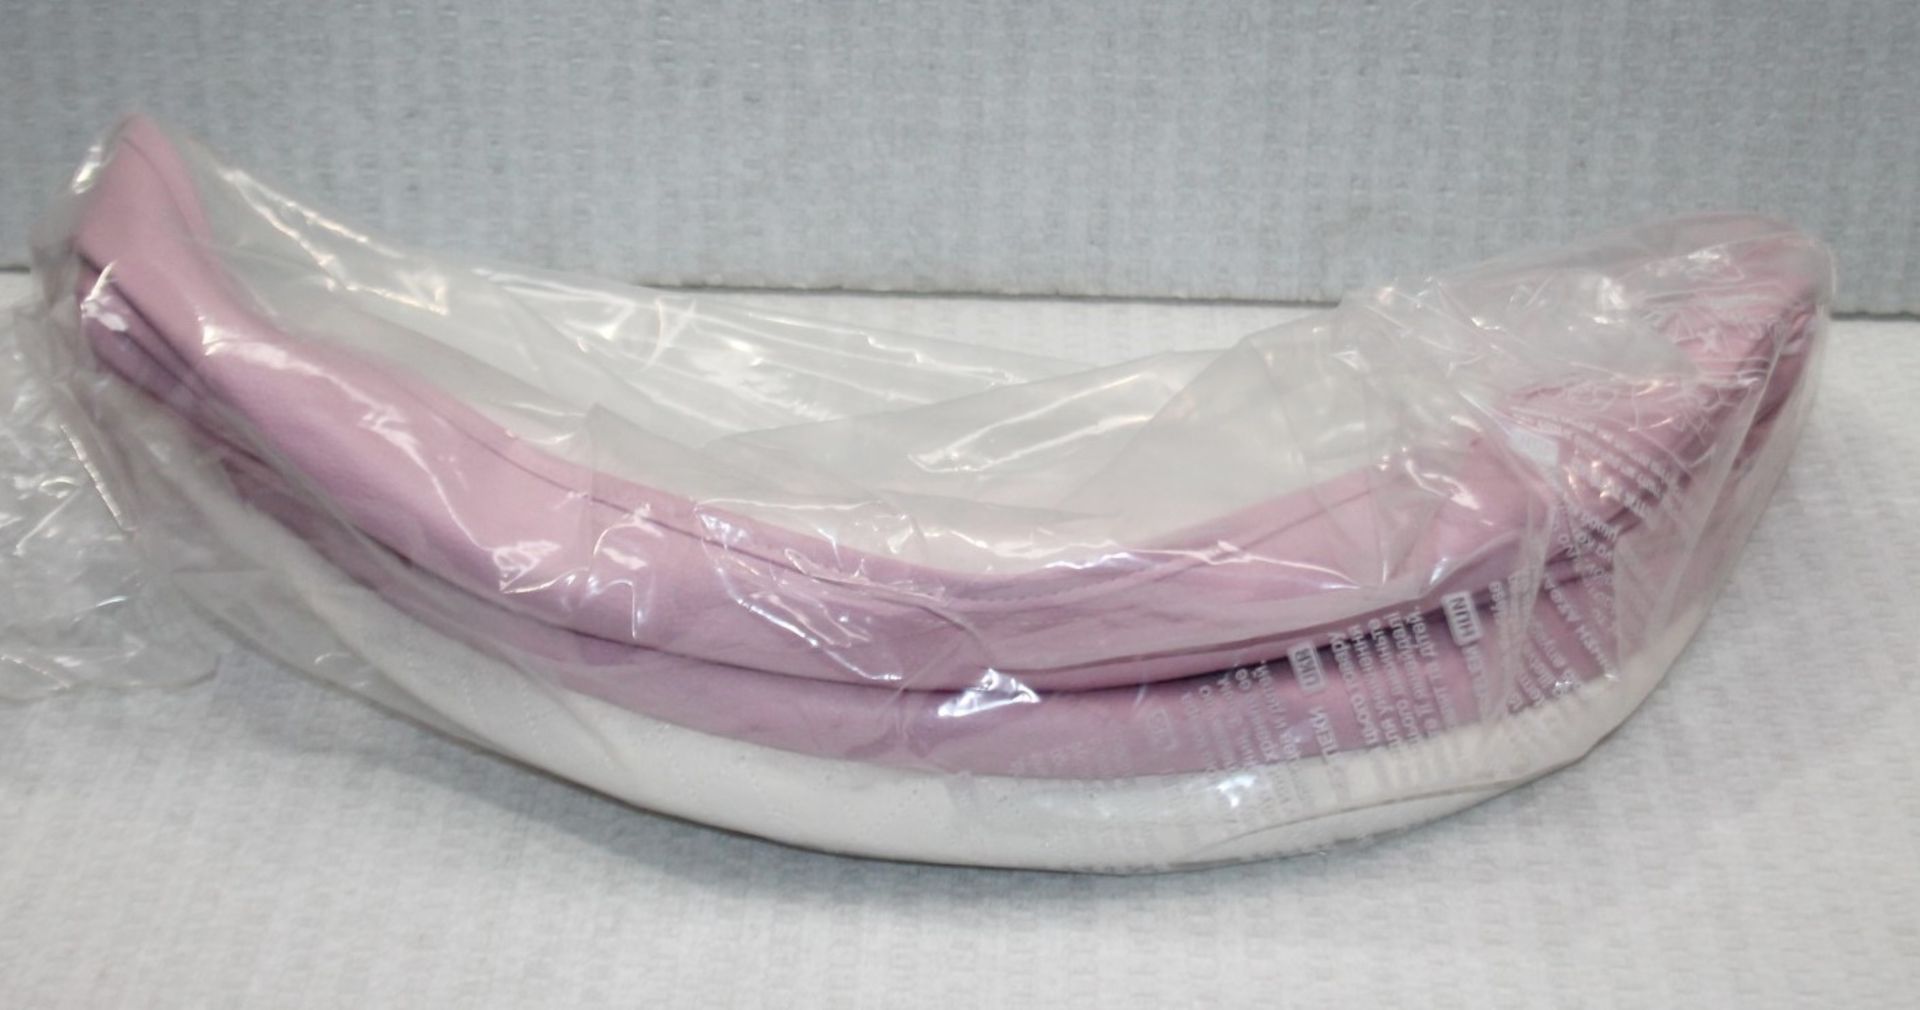 1 x BEBECAR 'Stylo' Premium Dolls Pram + Bag In Candy Pink - Original Price £325.00 - Image 6 of 13